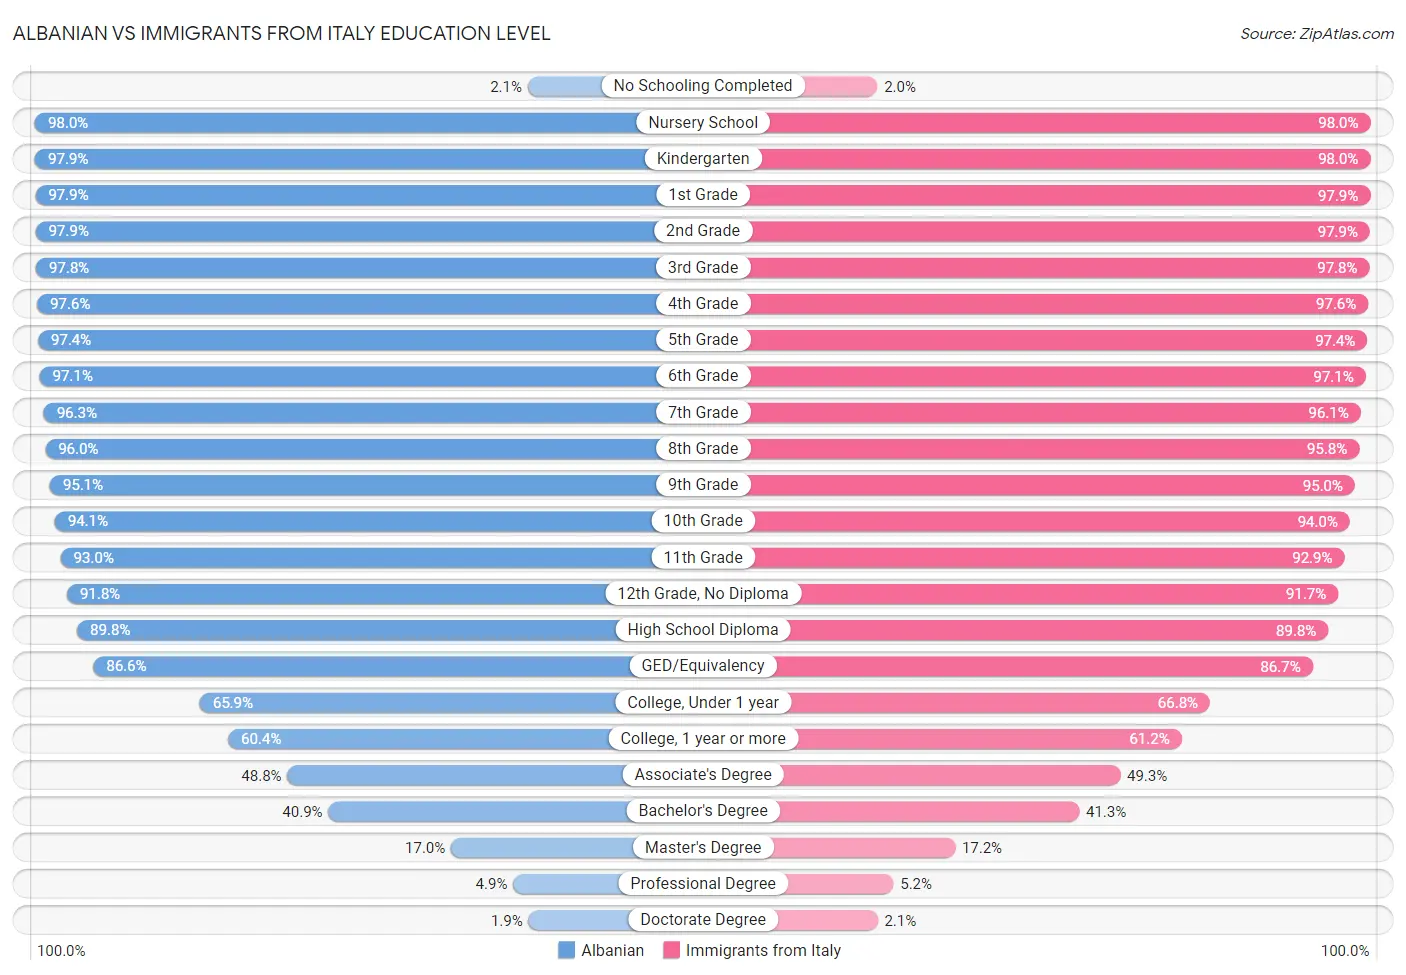 Albanian vs Immigrants from Italy Education Level